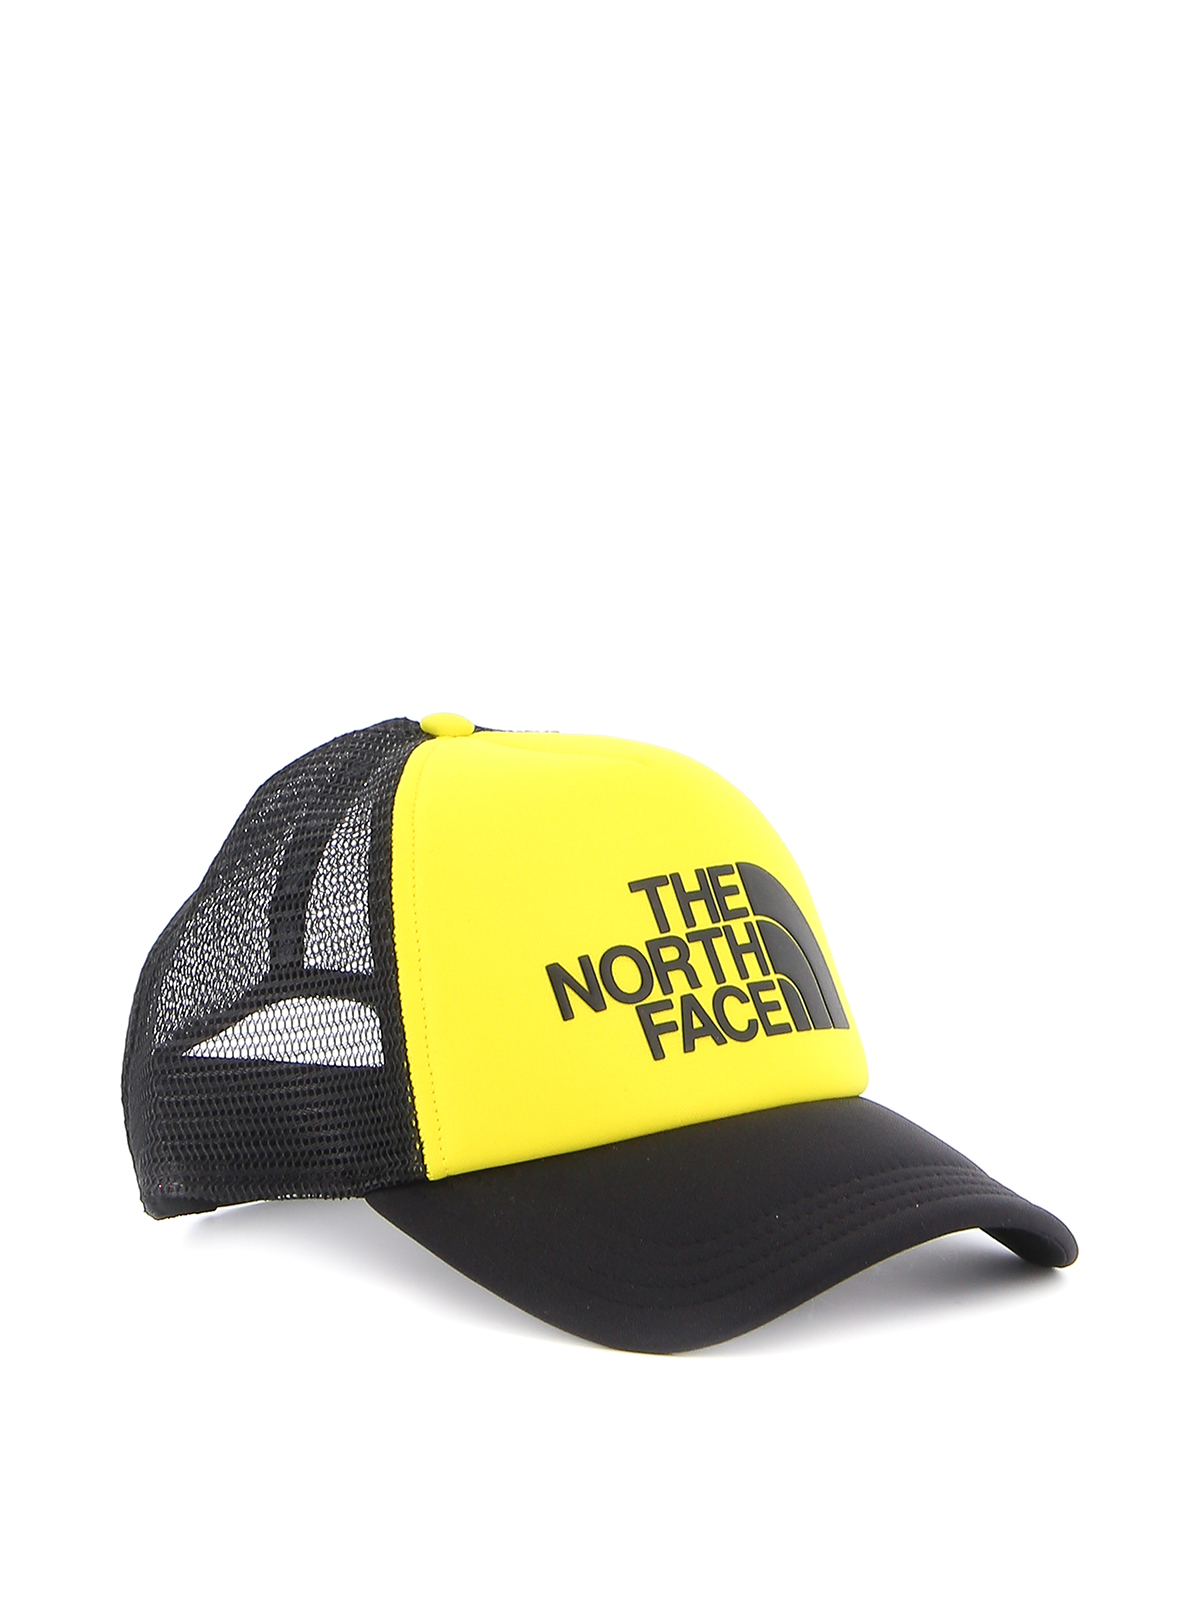 north face ball caps